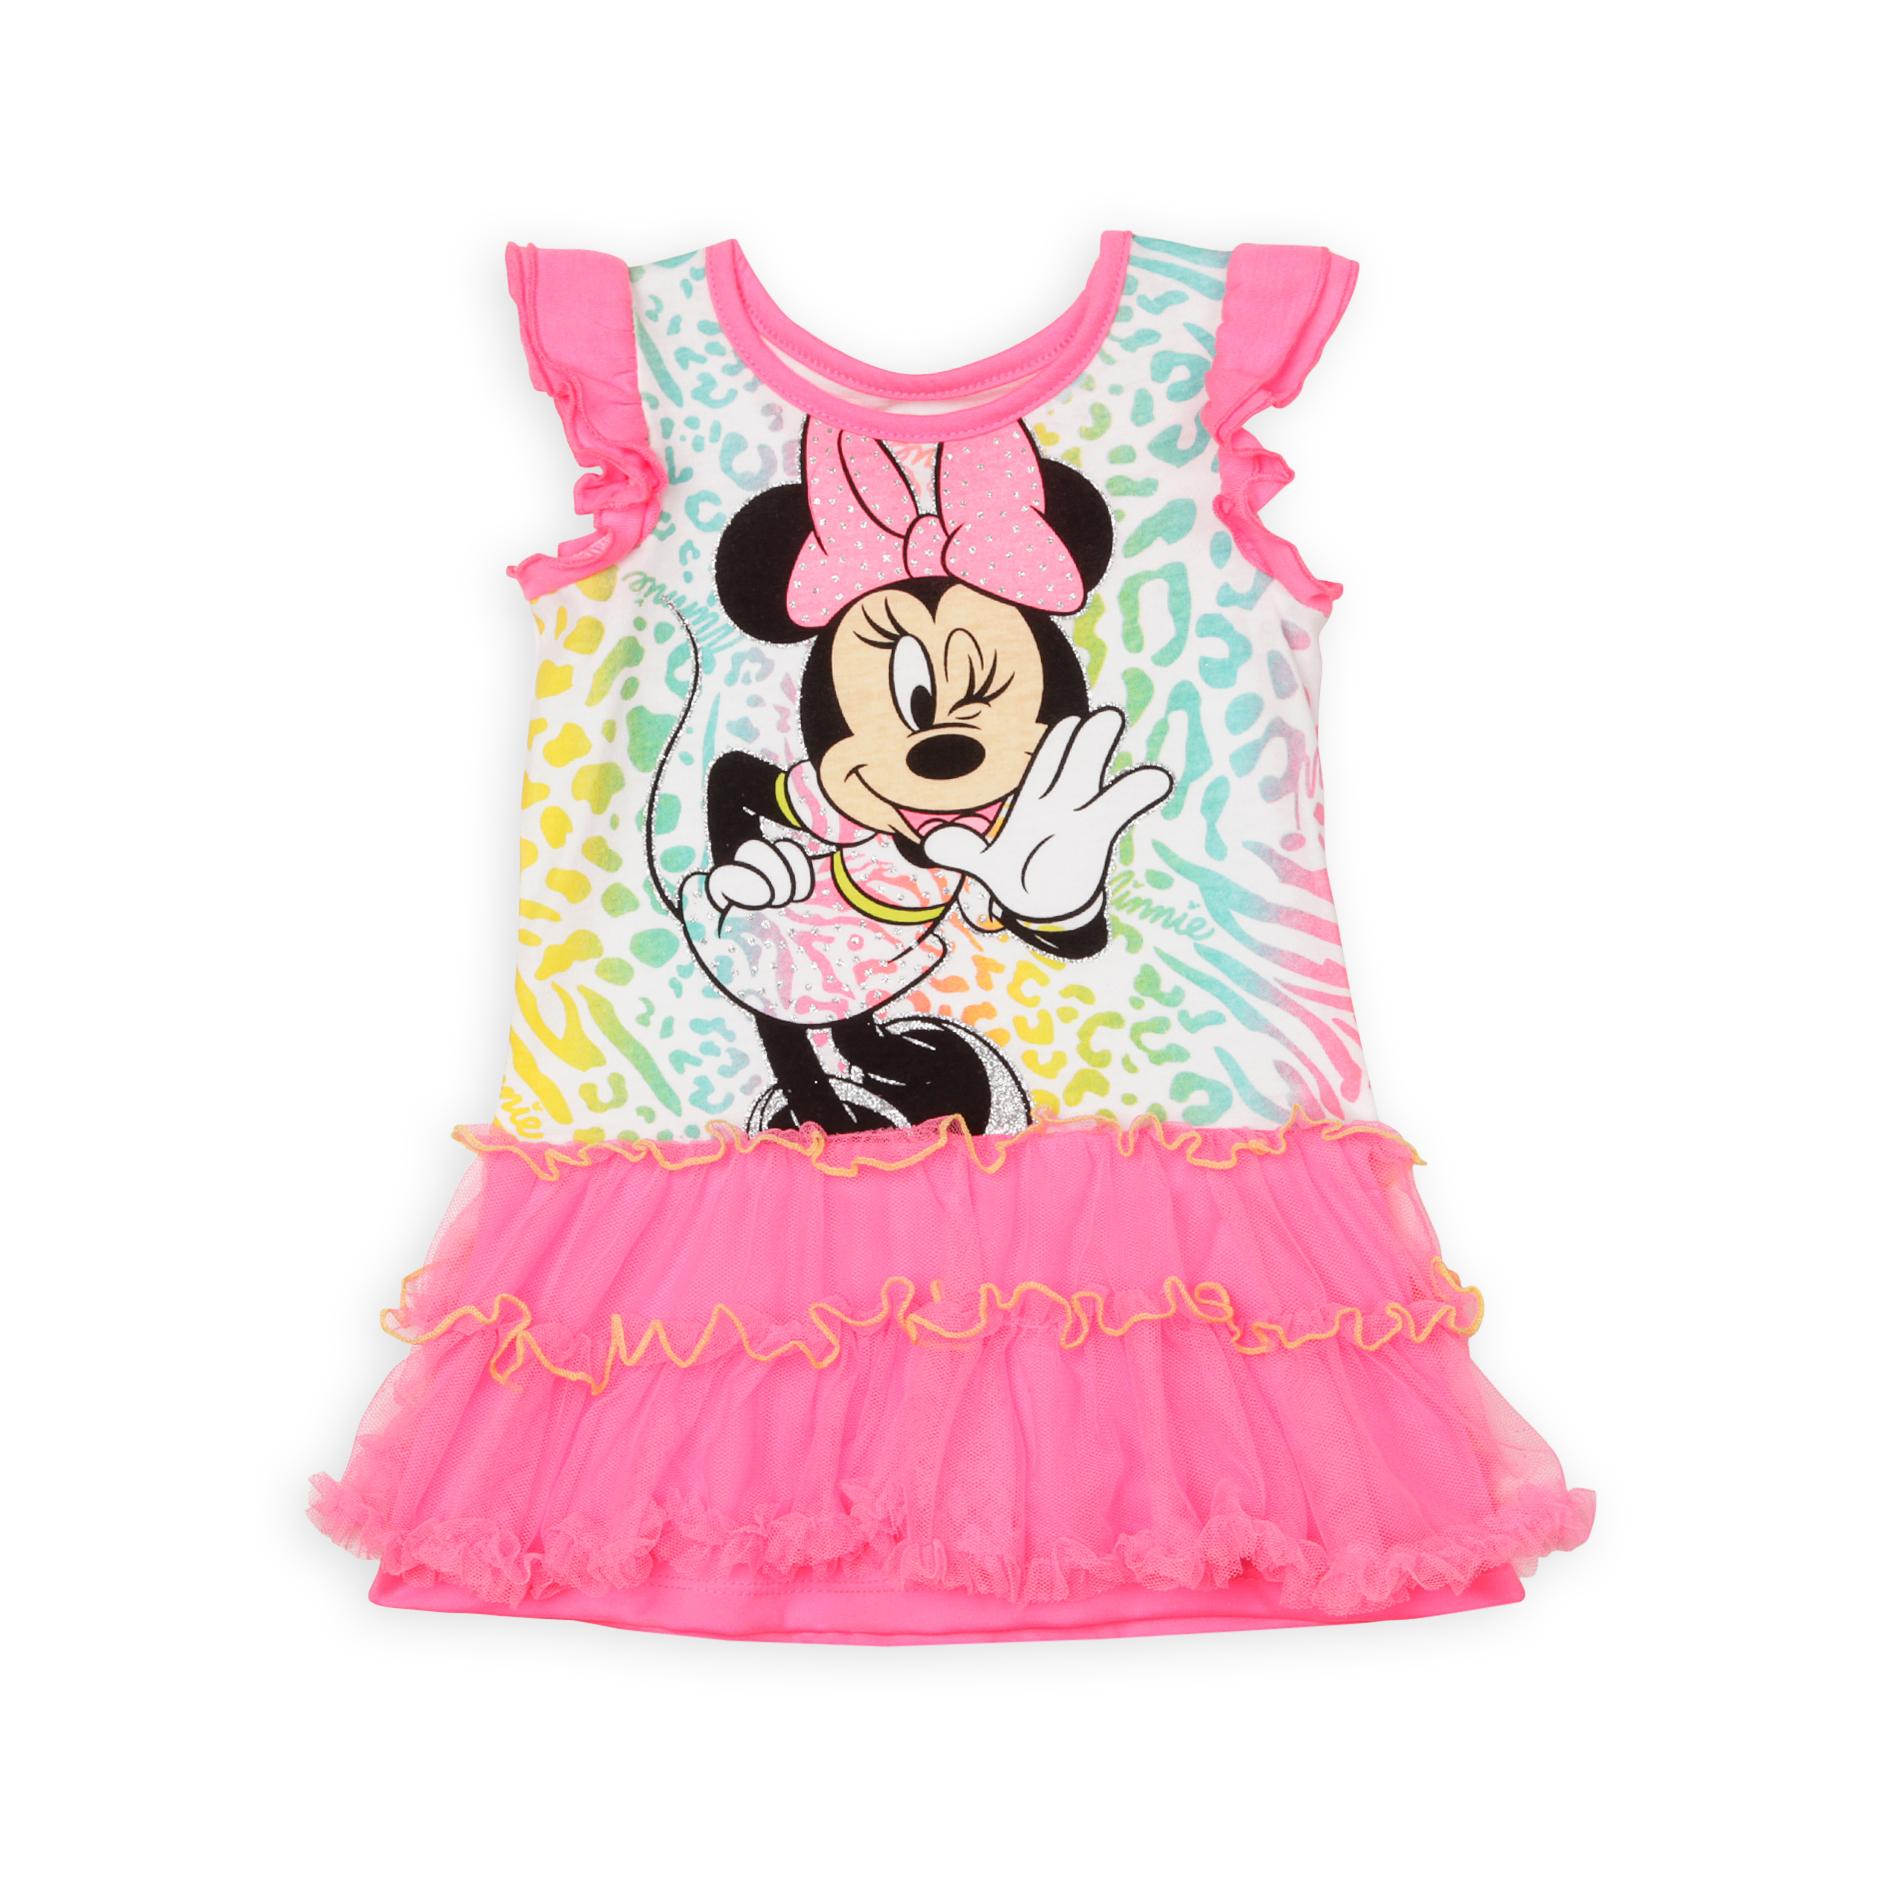 Disney Minnie Mouse Infant & Toddler Girl's Tutu Dress - Animal Print